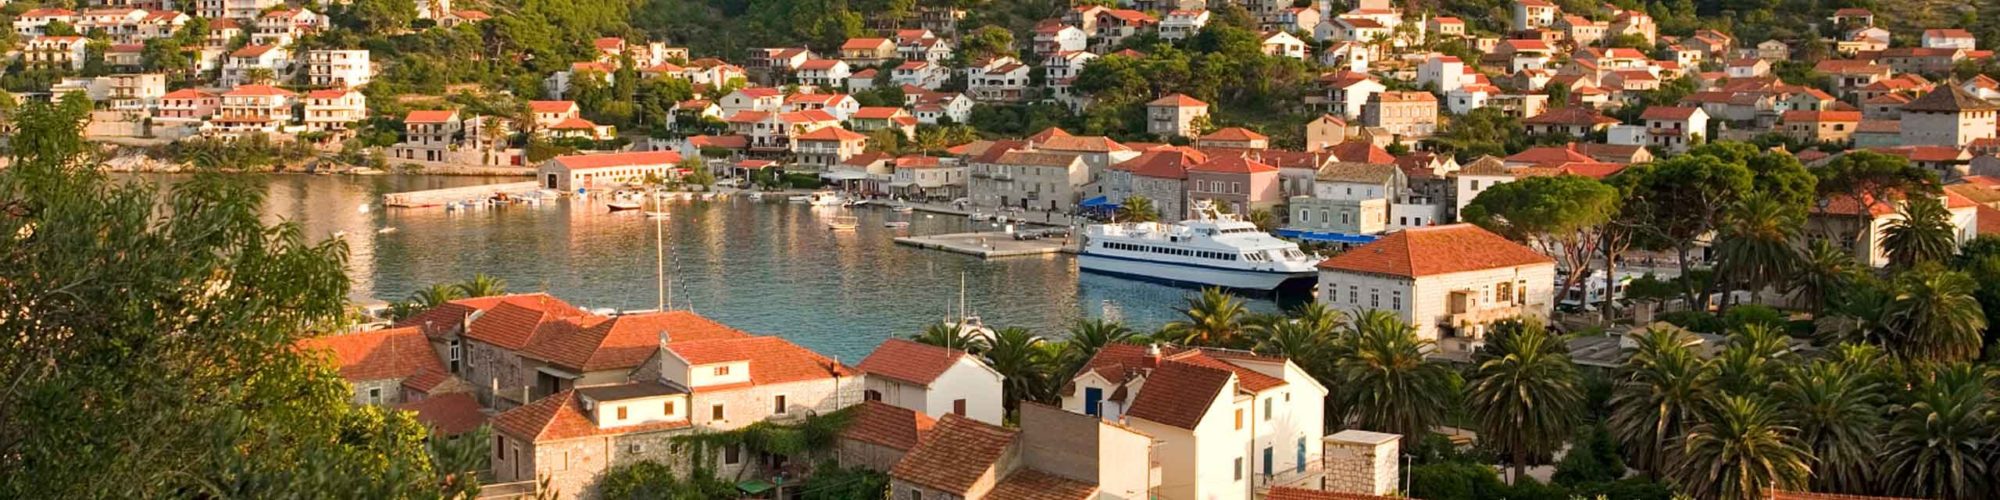 Croatia Travel travel agents packages deals